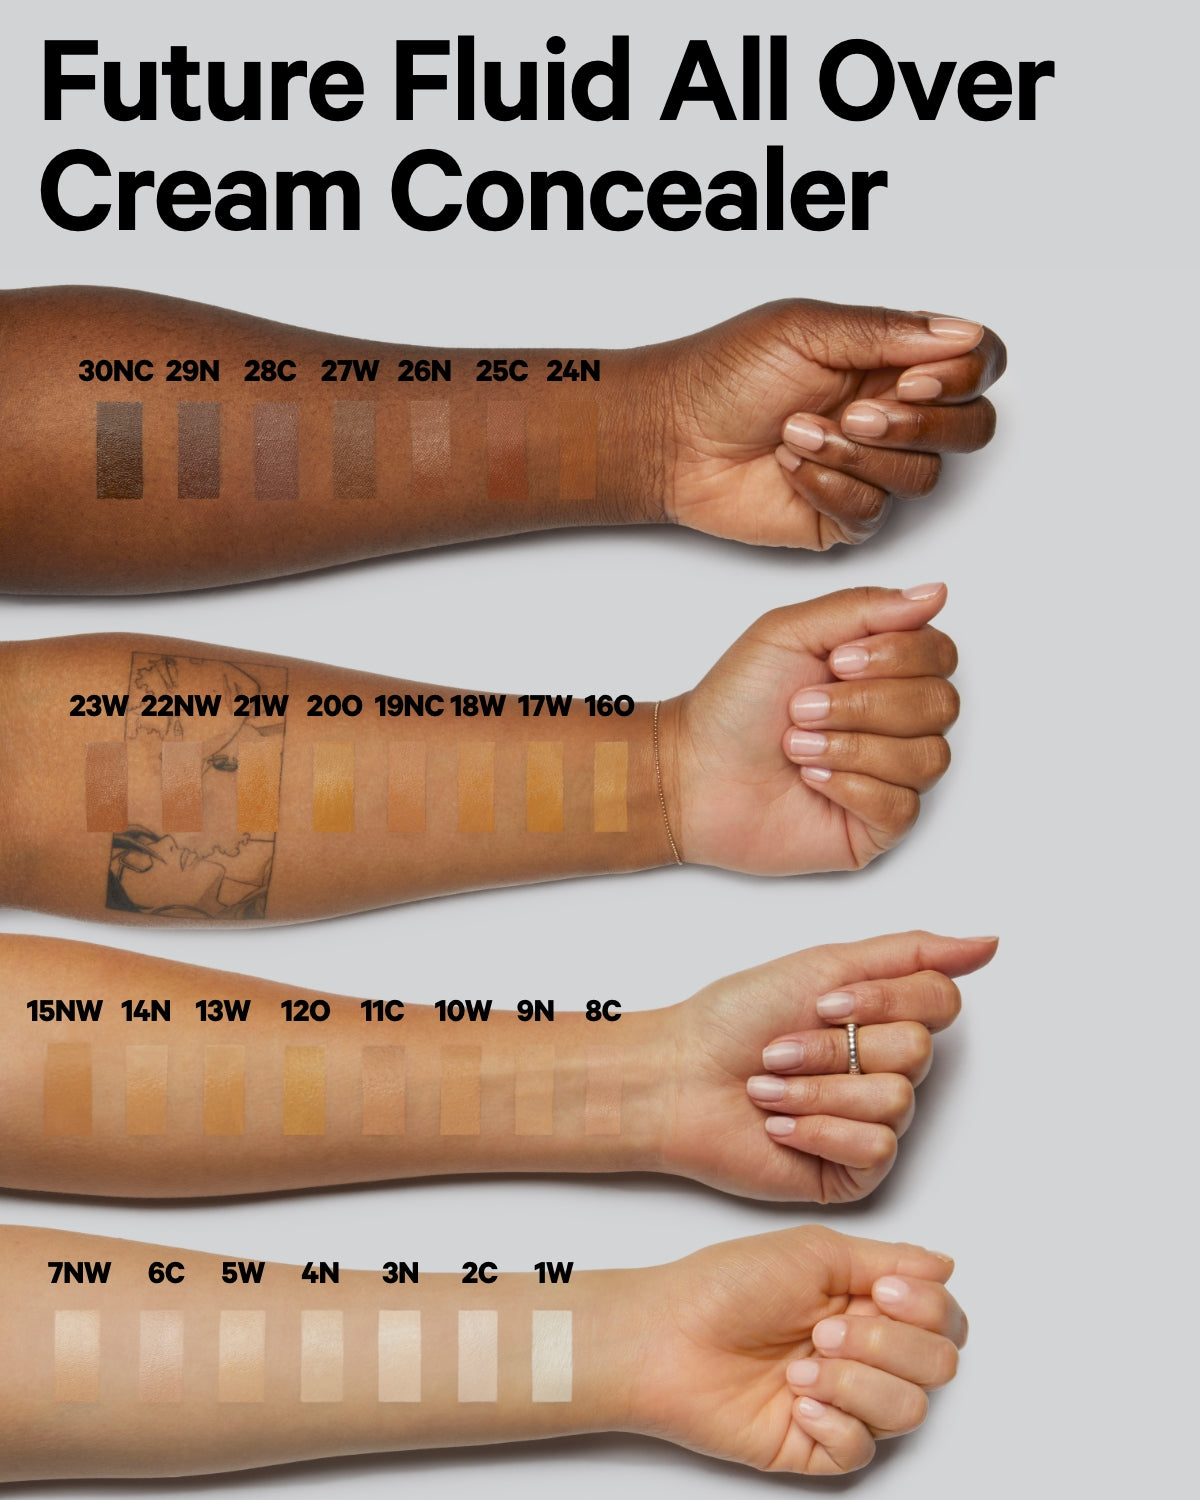 Future Fluid All Over Cream Concealer Arm Swatch | Milk Makeup